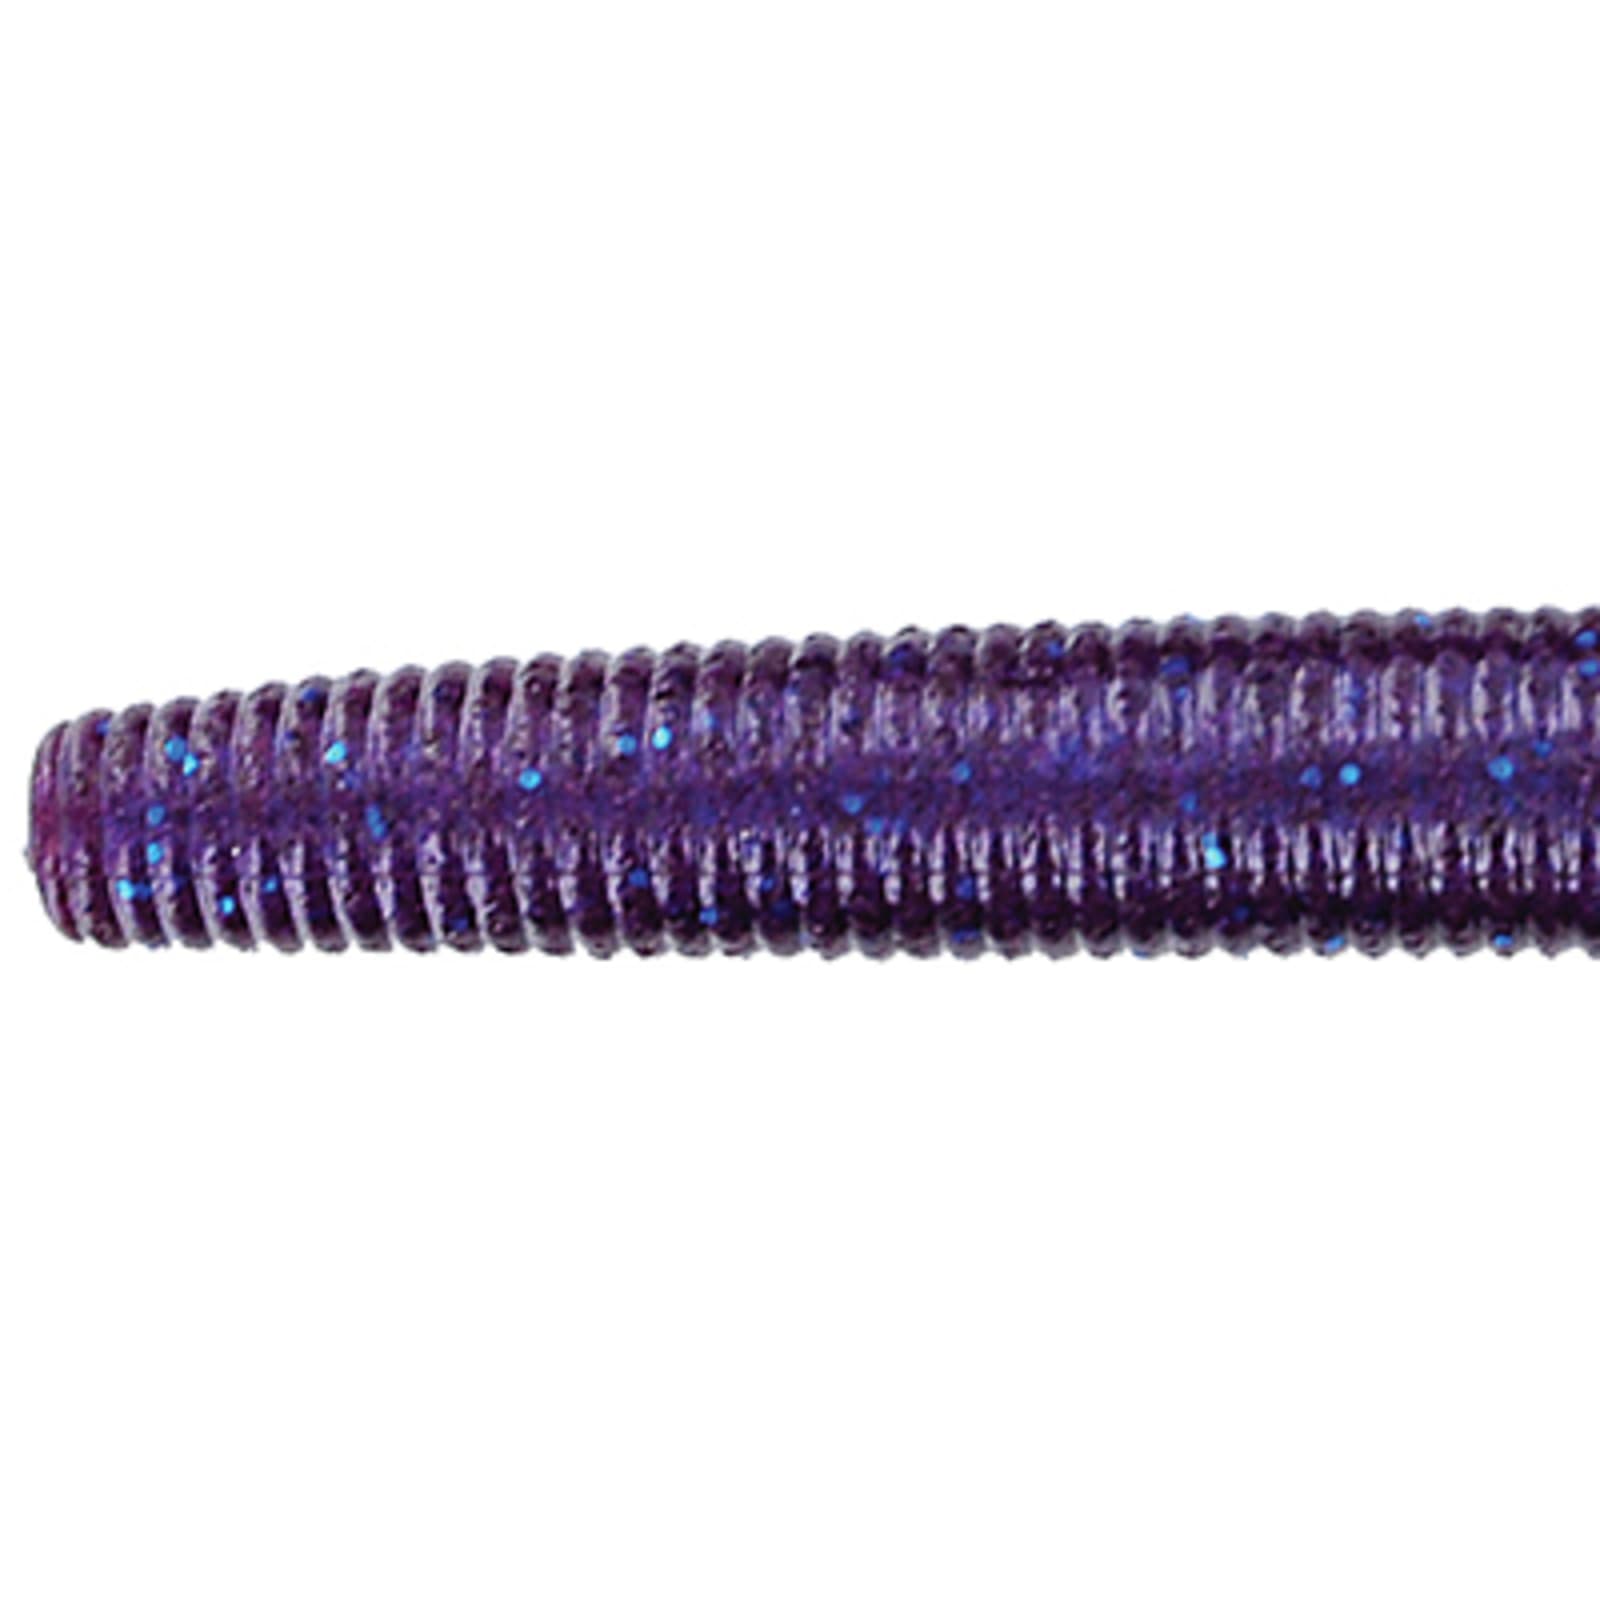 Gary Yamamoto Senko Worm 4 10 Pack Purple Pearl with Small Blue